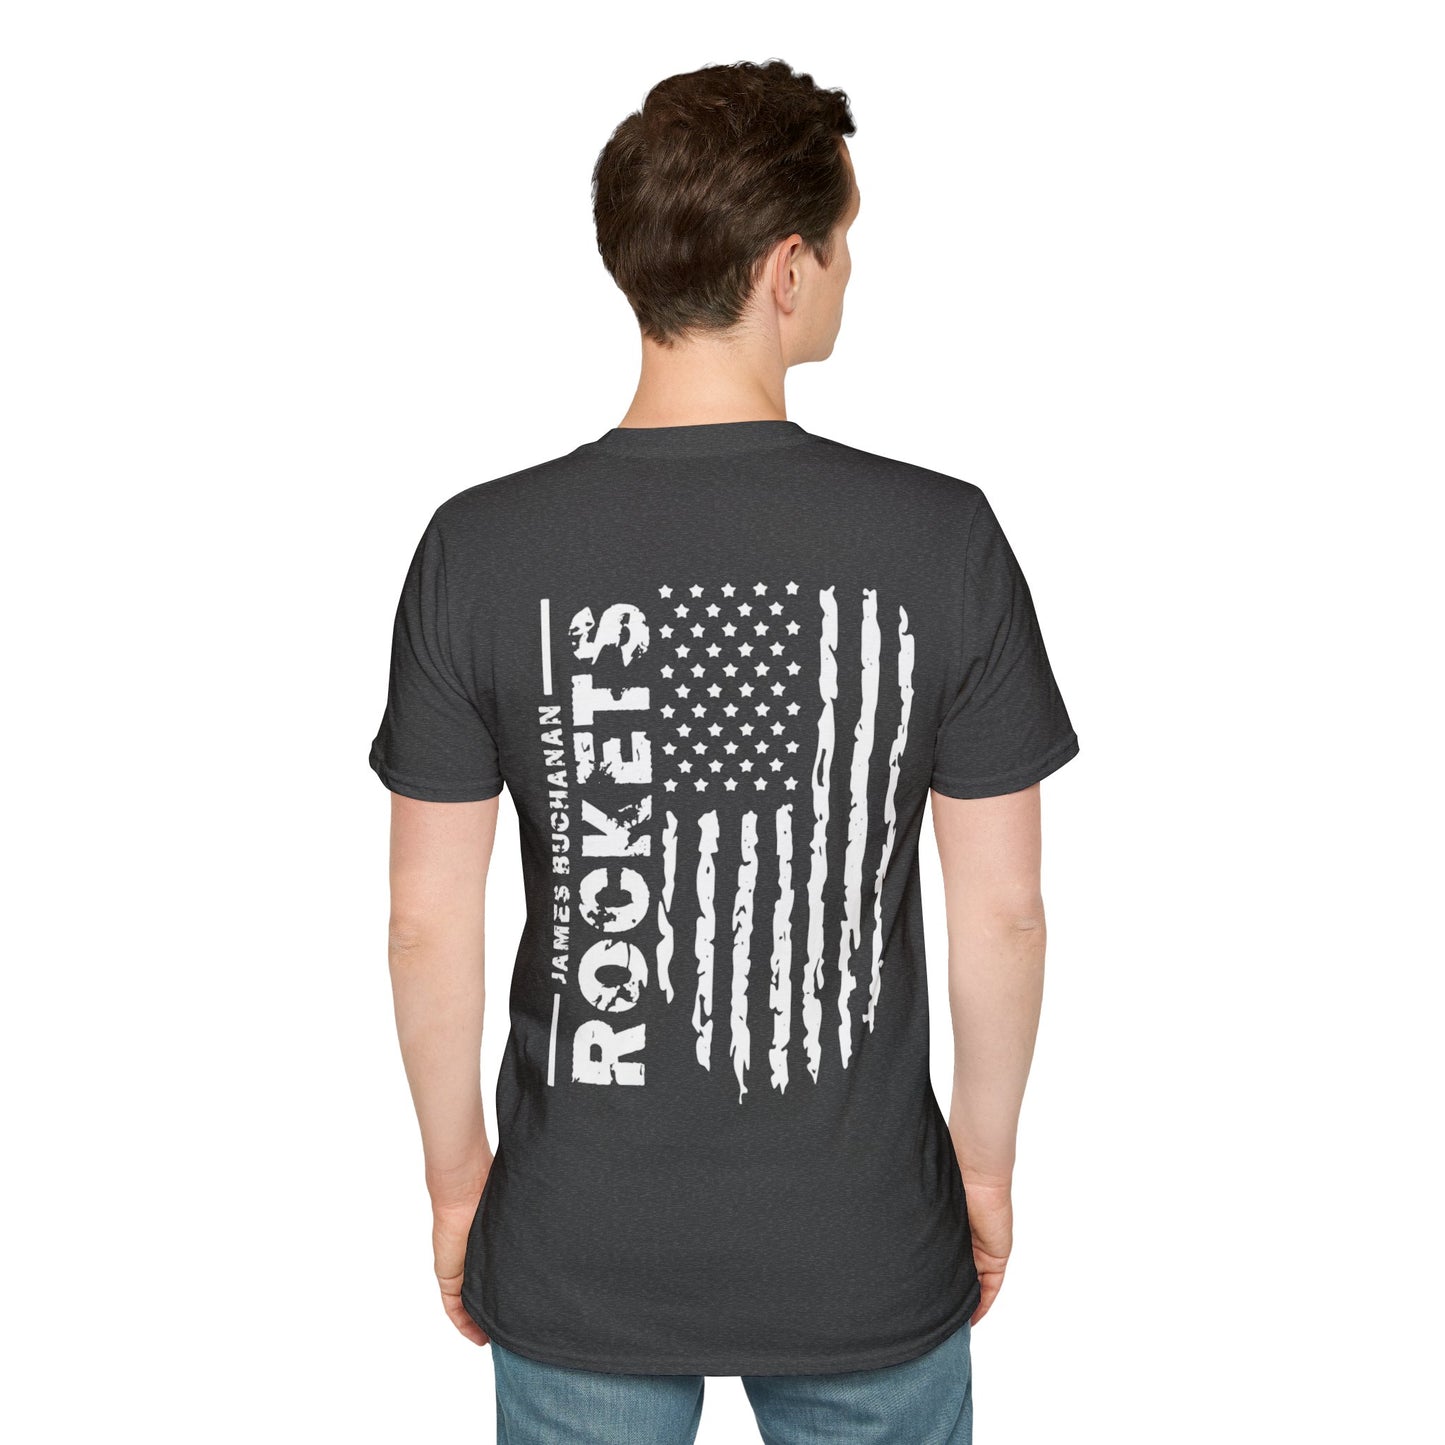 Rocket Football FLAG Unisex Softstyle T-Shirt